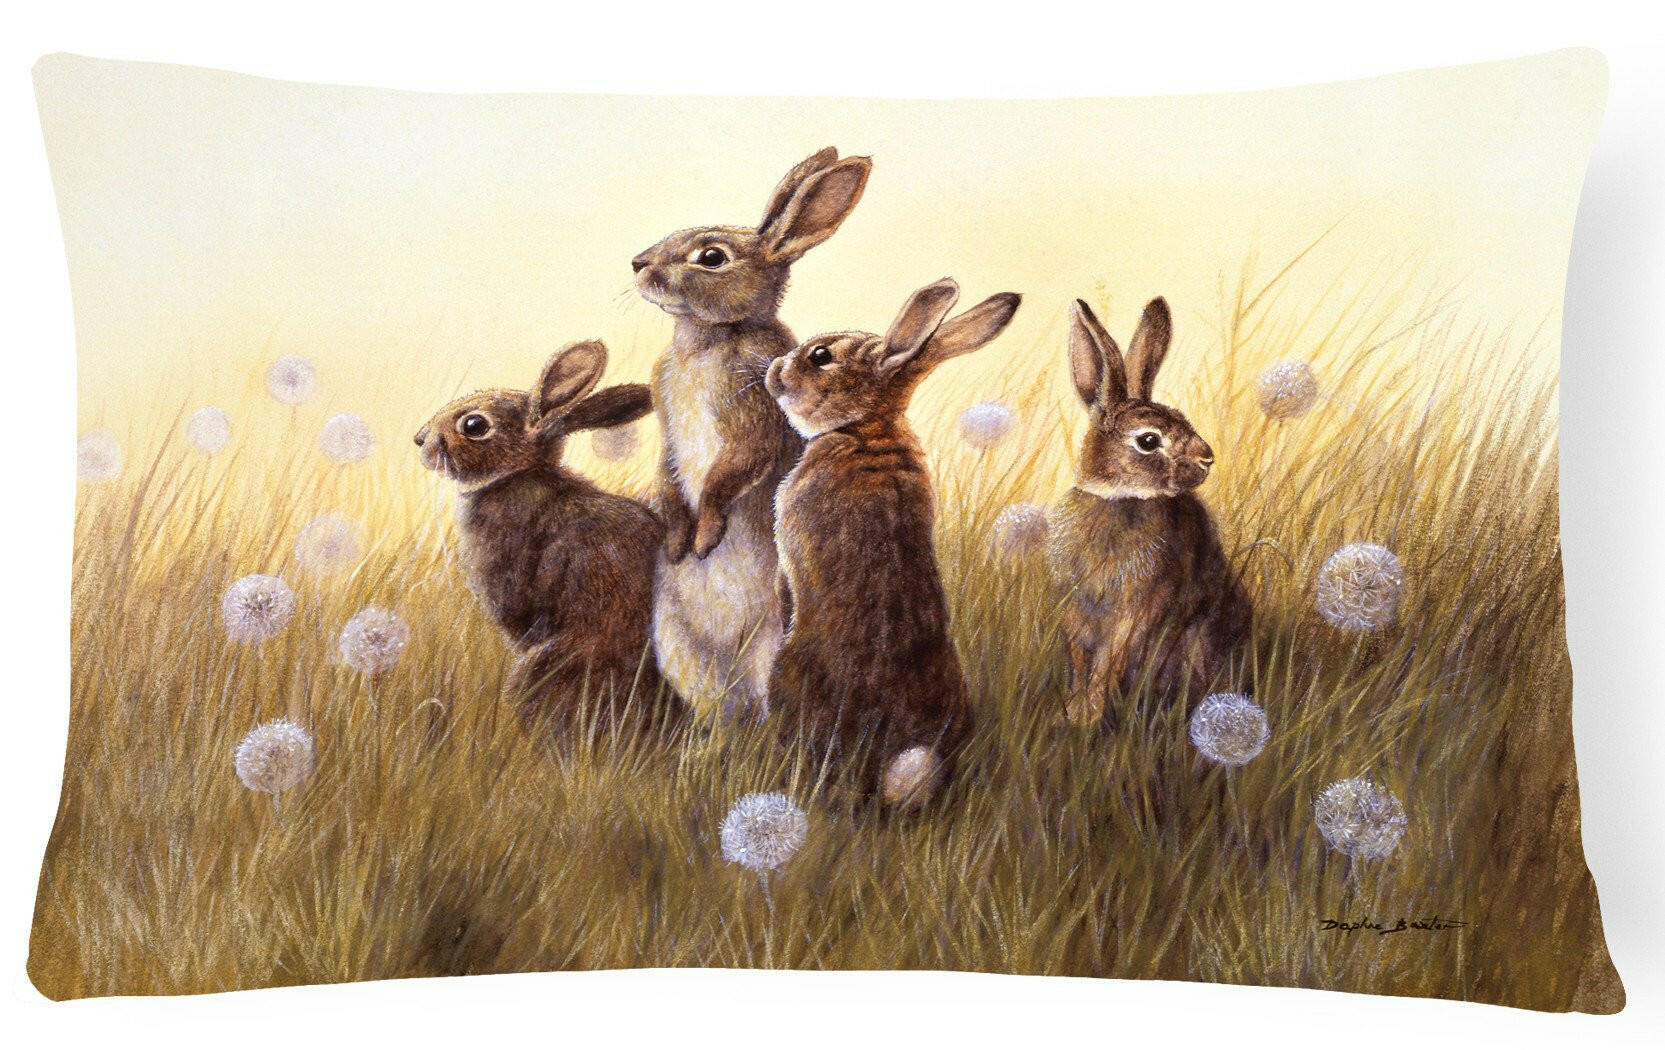 Rabbits in the Dandelions Fabric Decorative Pillow BDBA0144PW1216 by Caroline's Treasures